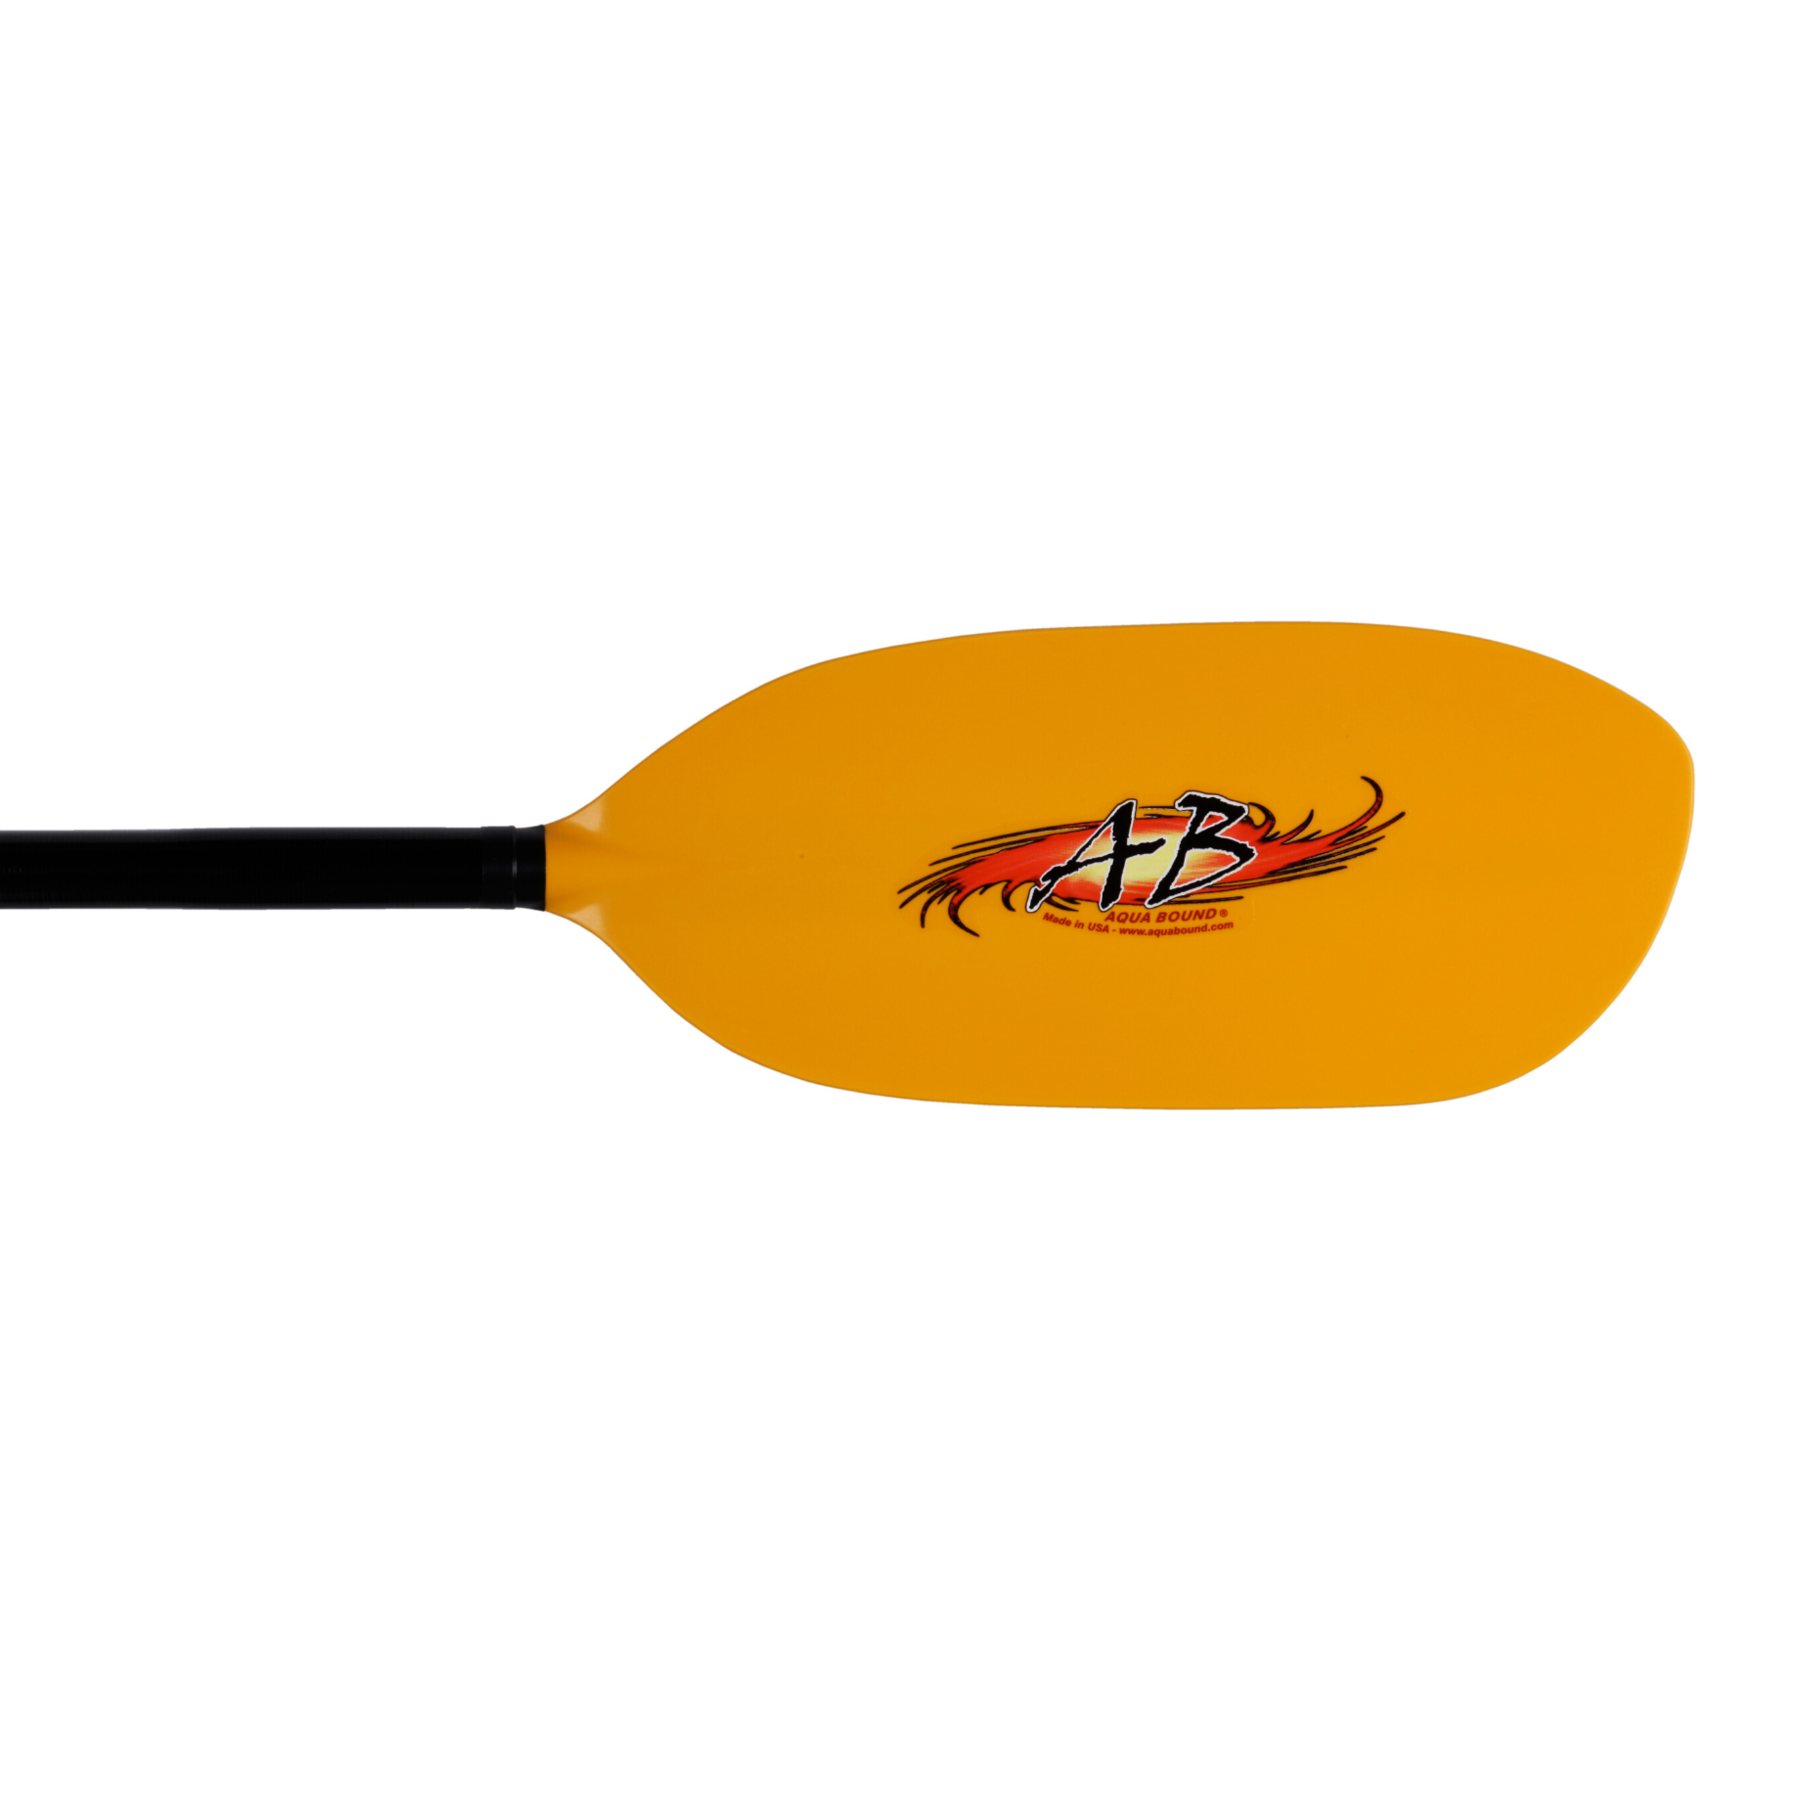 Aquabound - Shred Fiberglass Paddle (Past Season)